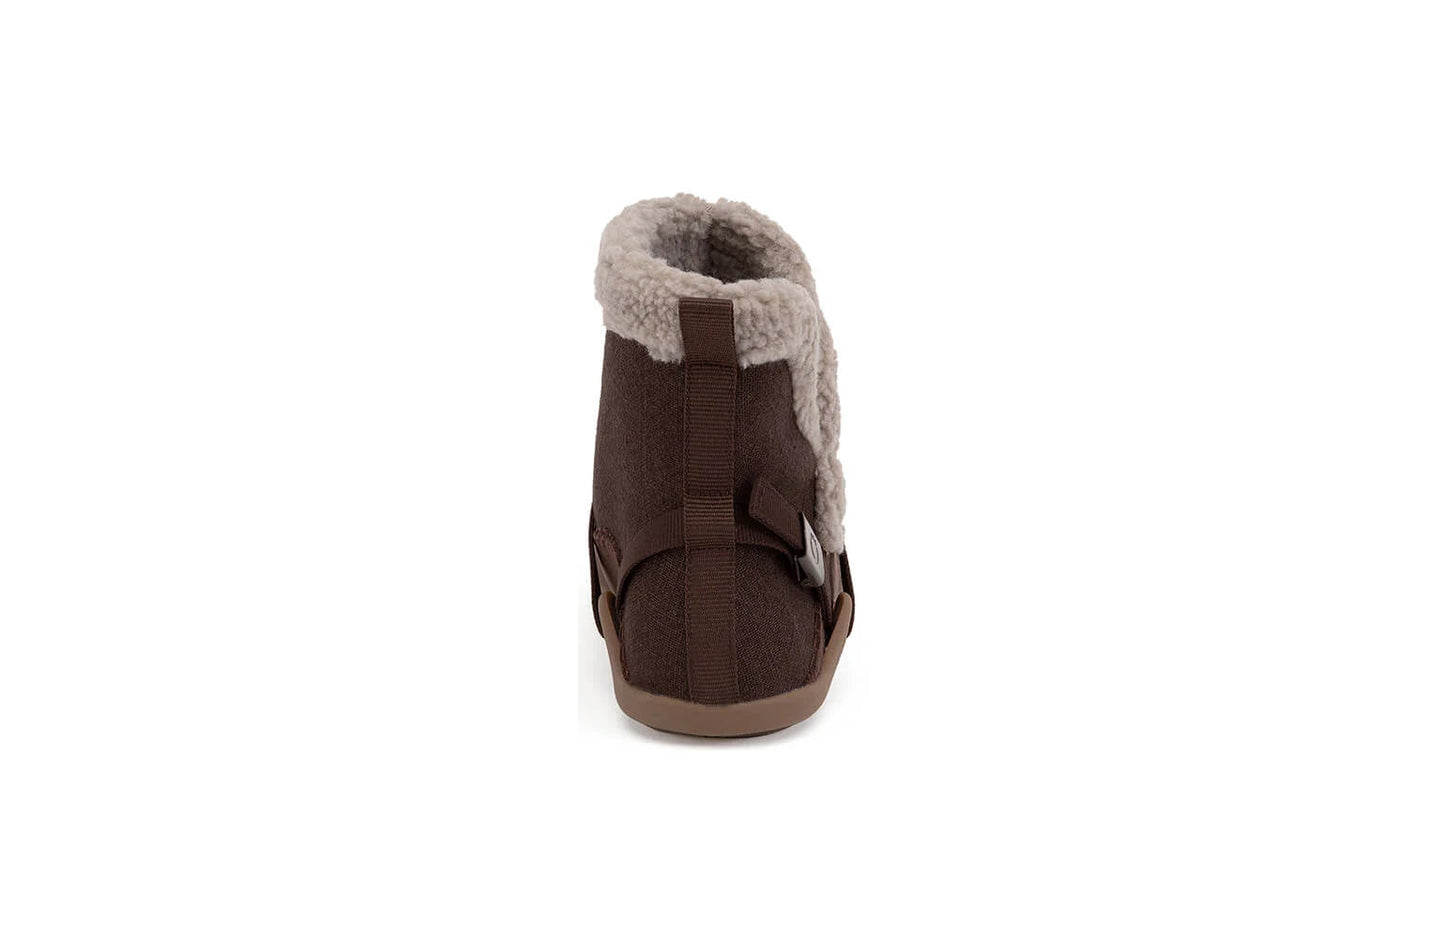 Xero Shoes - Ashland Java Brown - botines barefoot de invierno